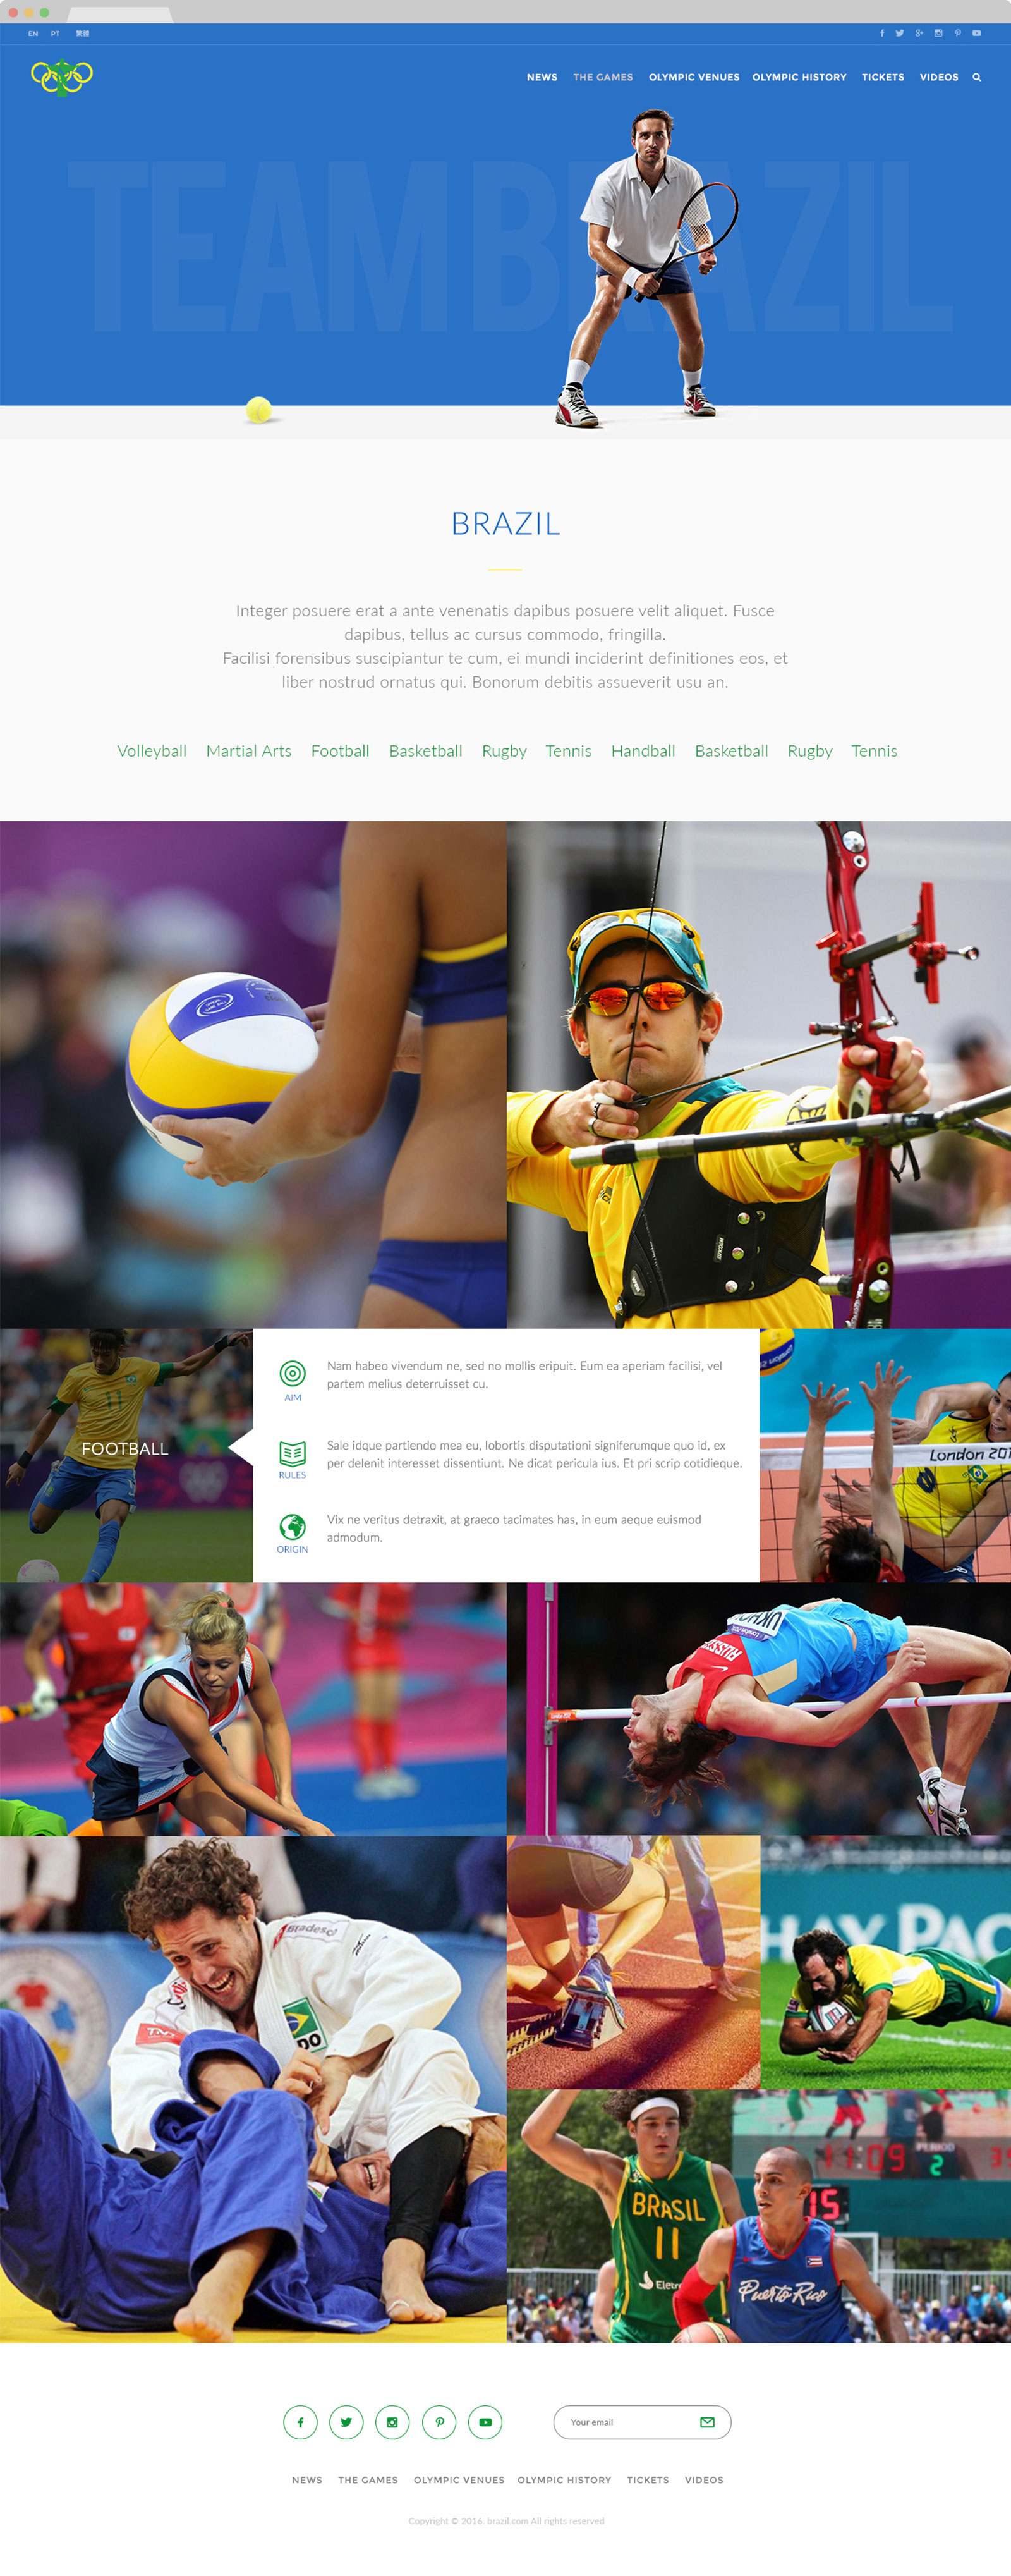 web design singapore brazil 03 - Brazil.com Olympics